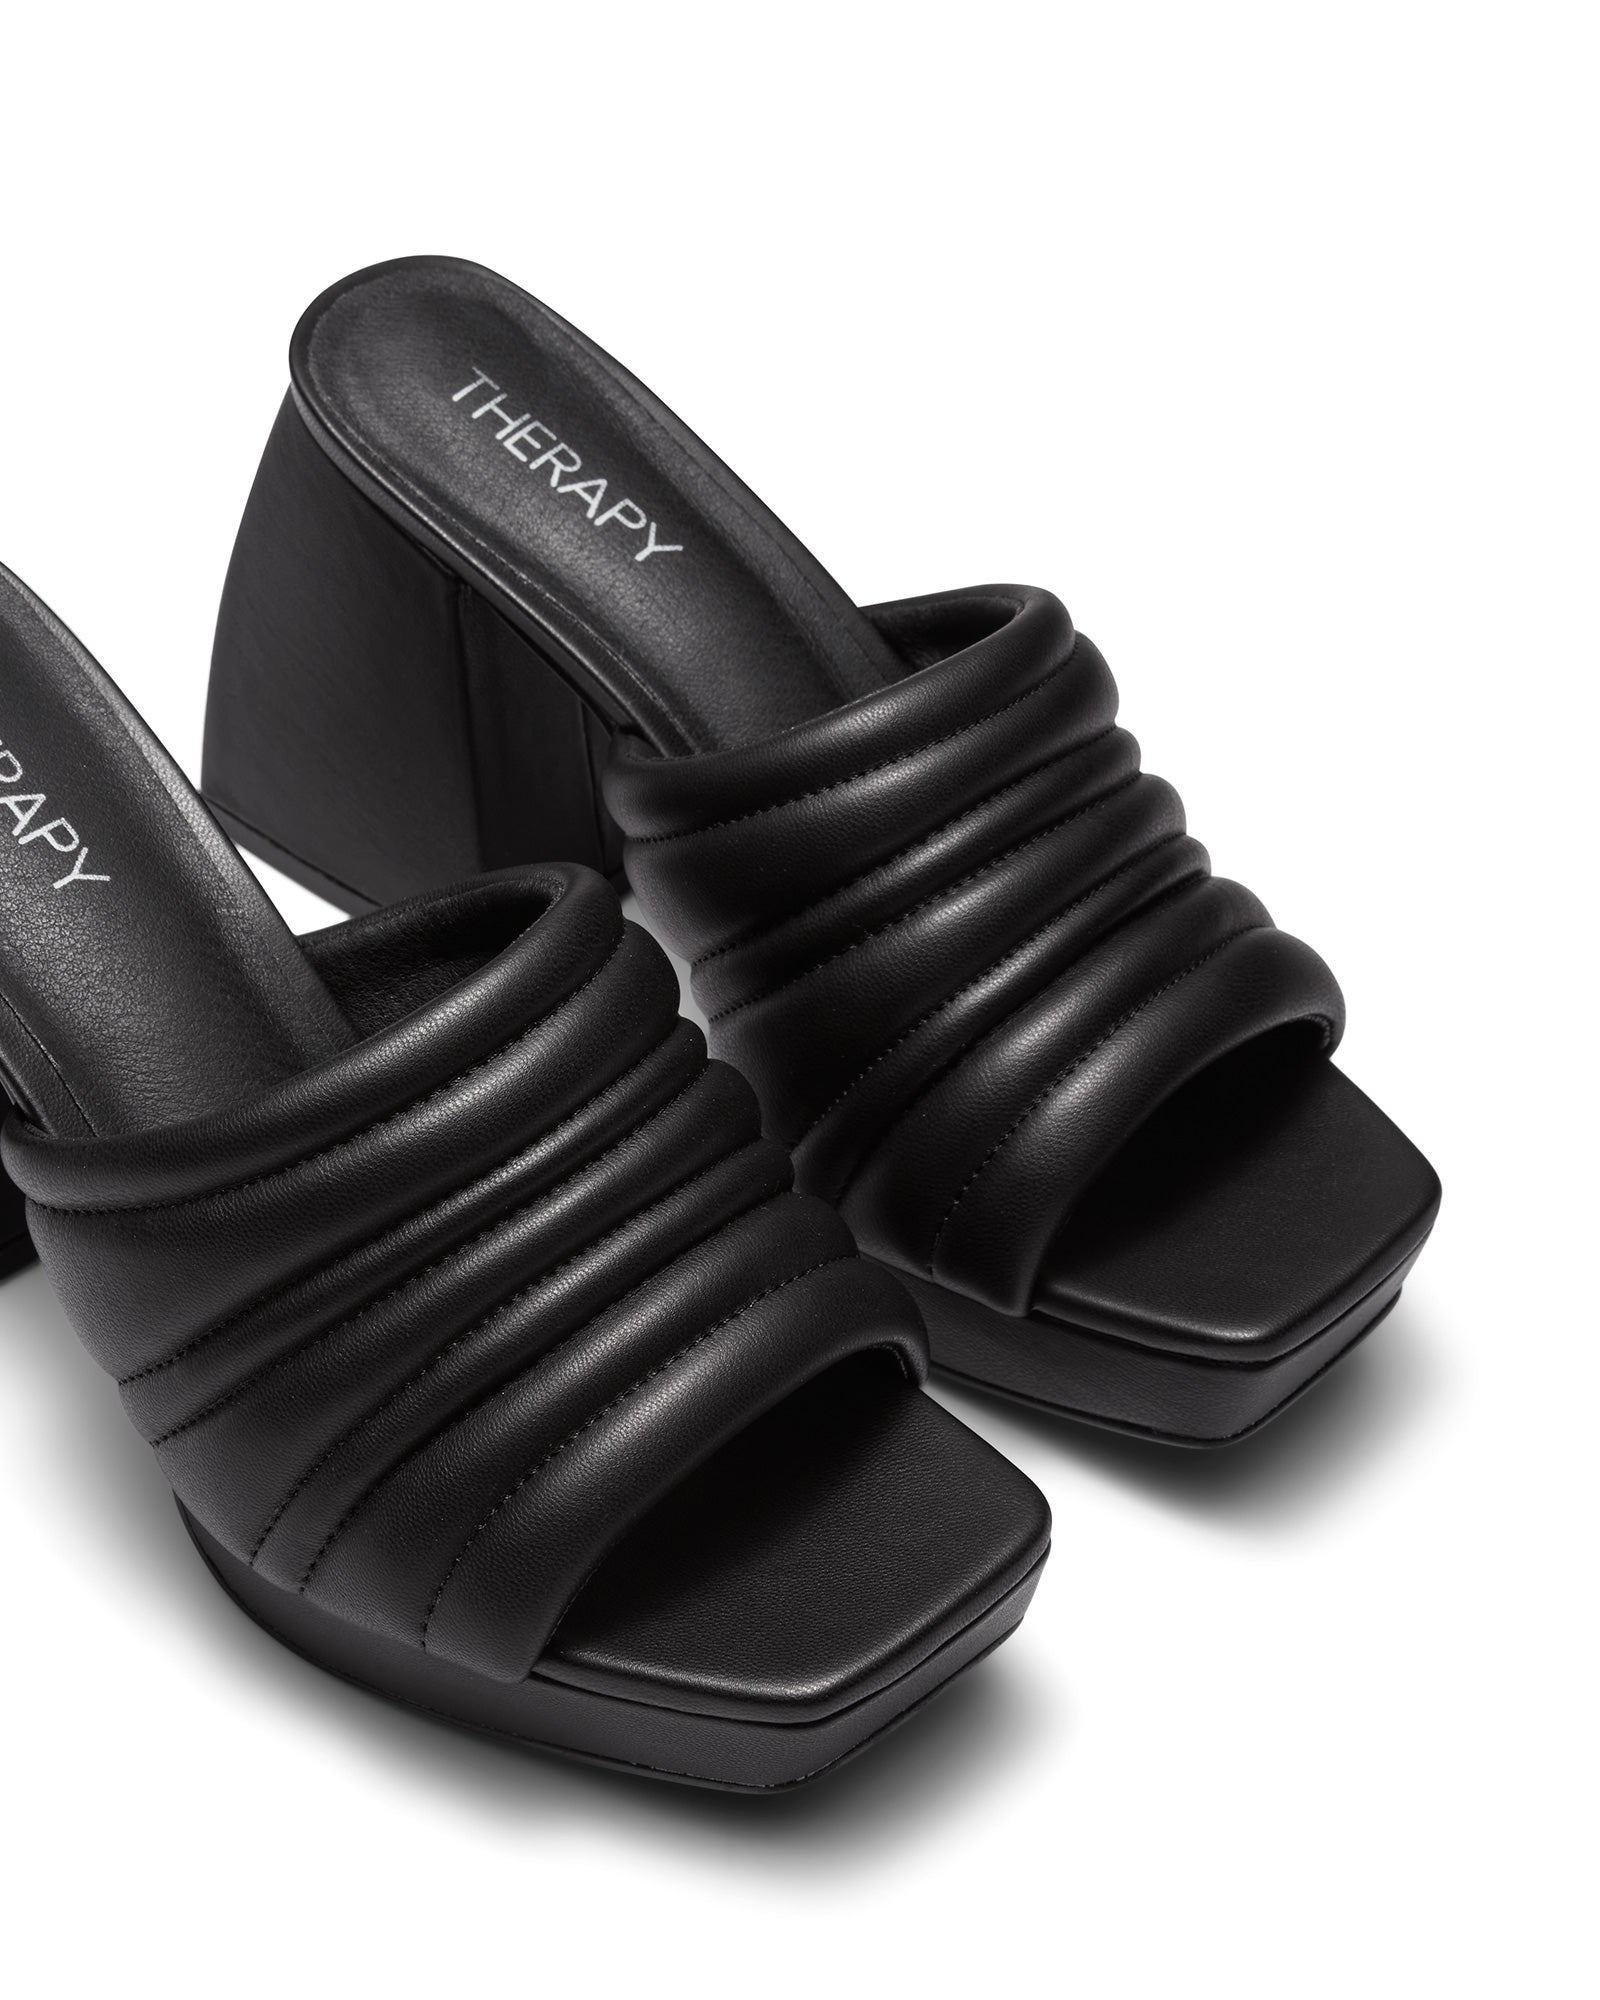 Therapy Shoes Euphoria Black | Women's Heels | Sandals | Platform | Mule